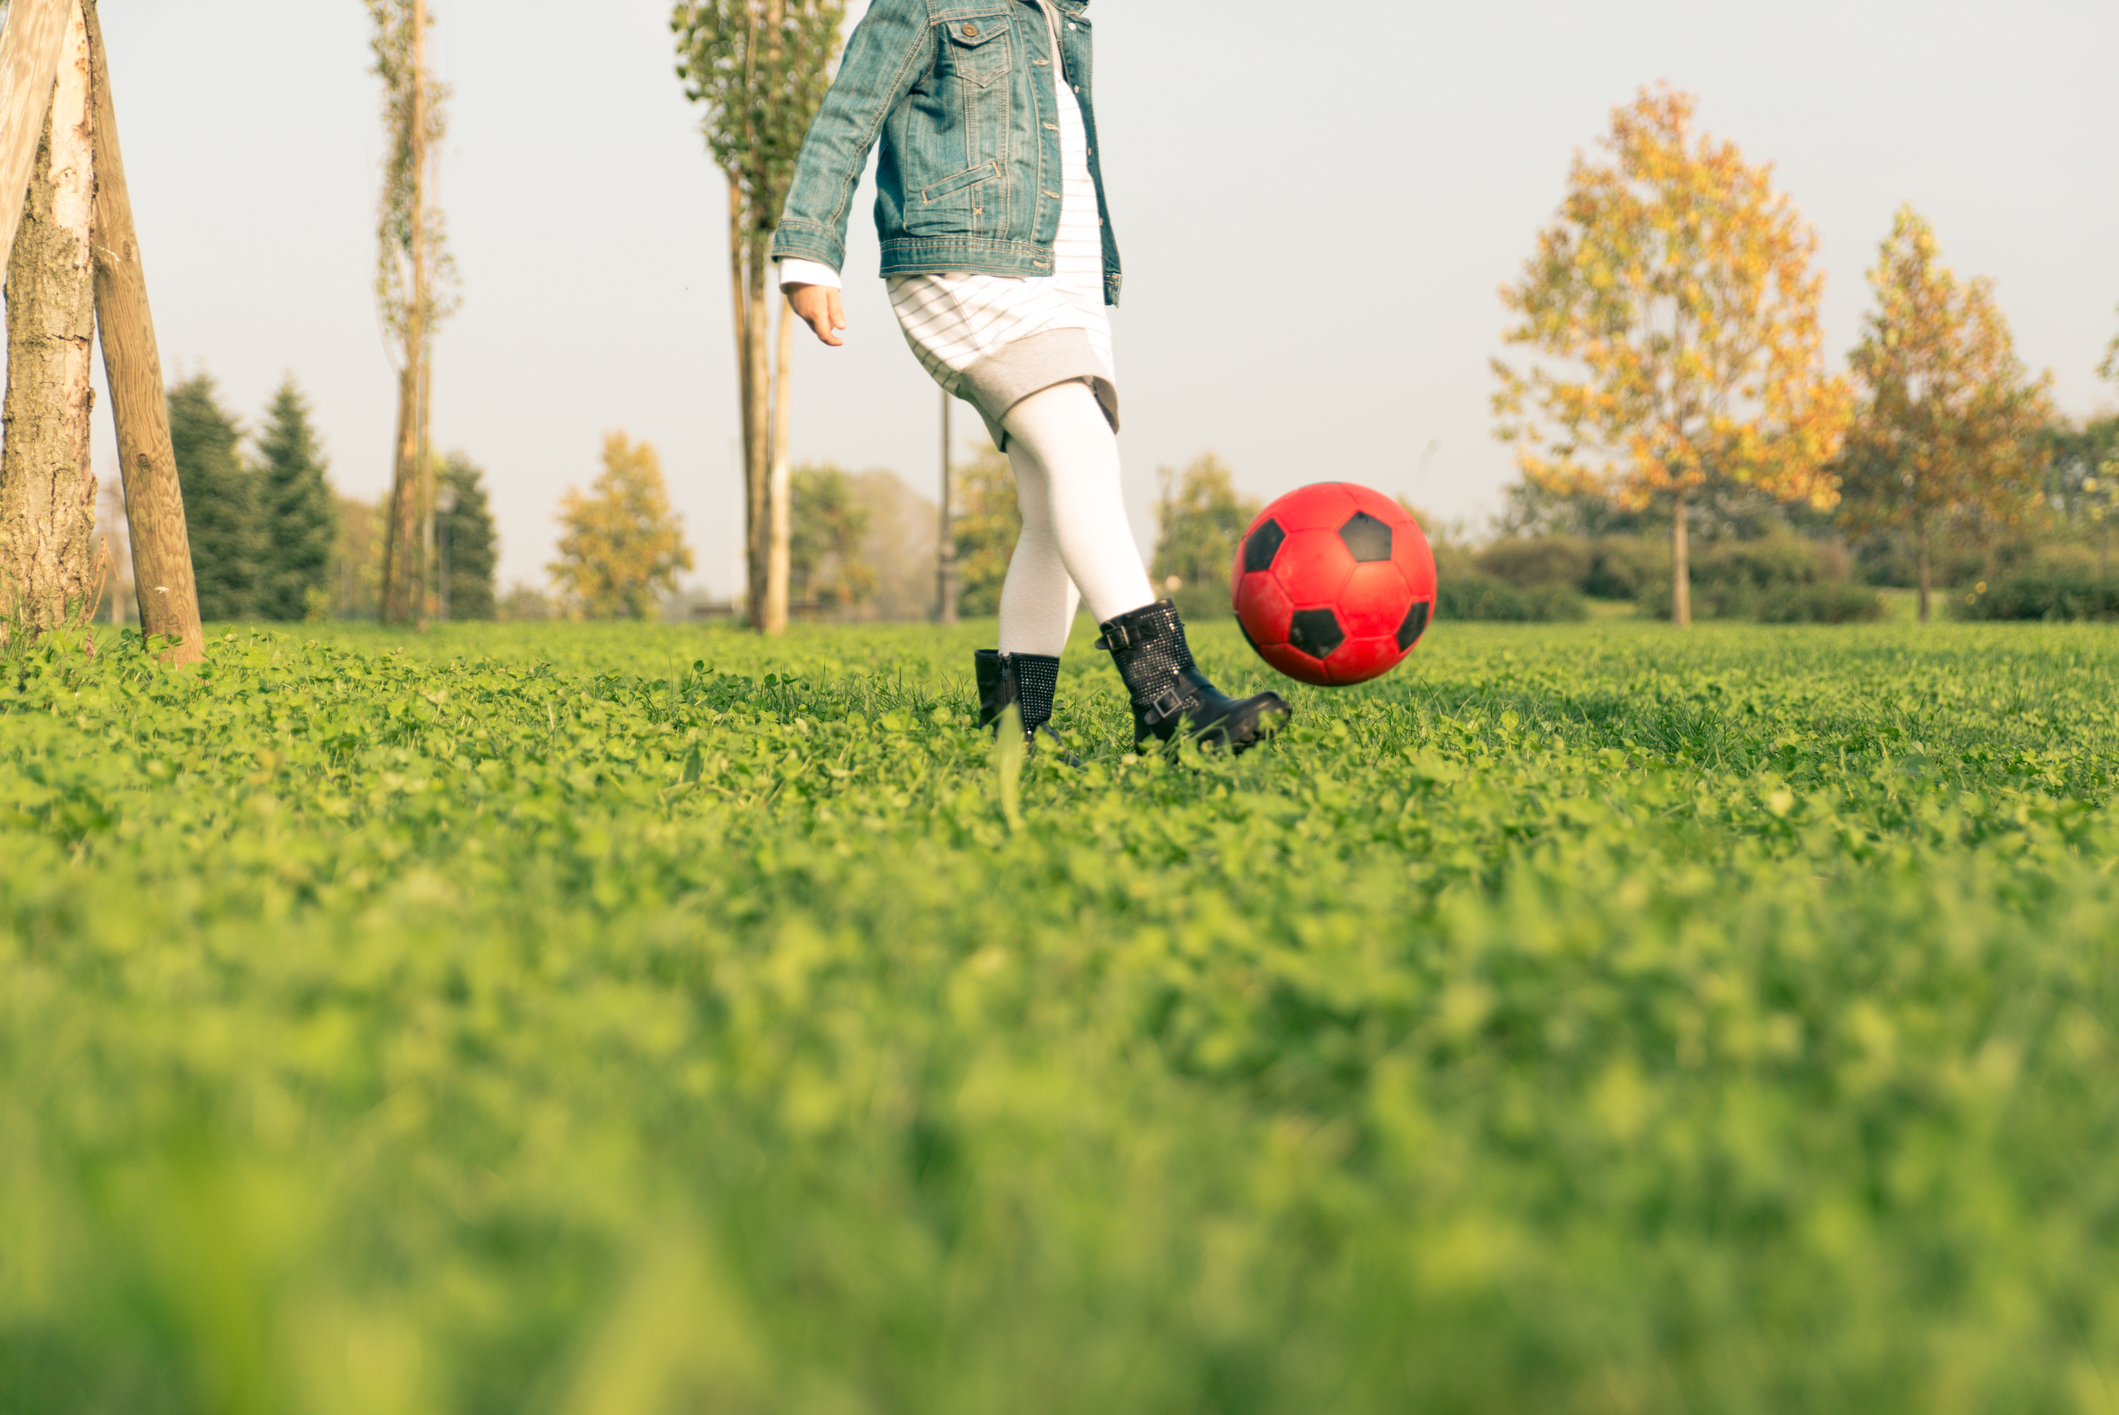 Girl kicks soccer ball in park. Fabio Formaggio | Dreamstime.com
